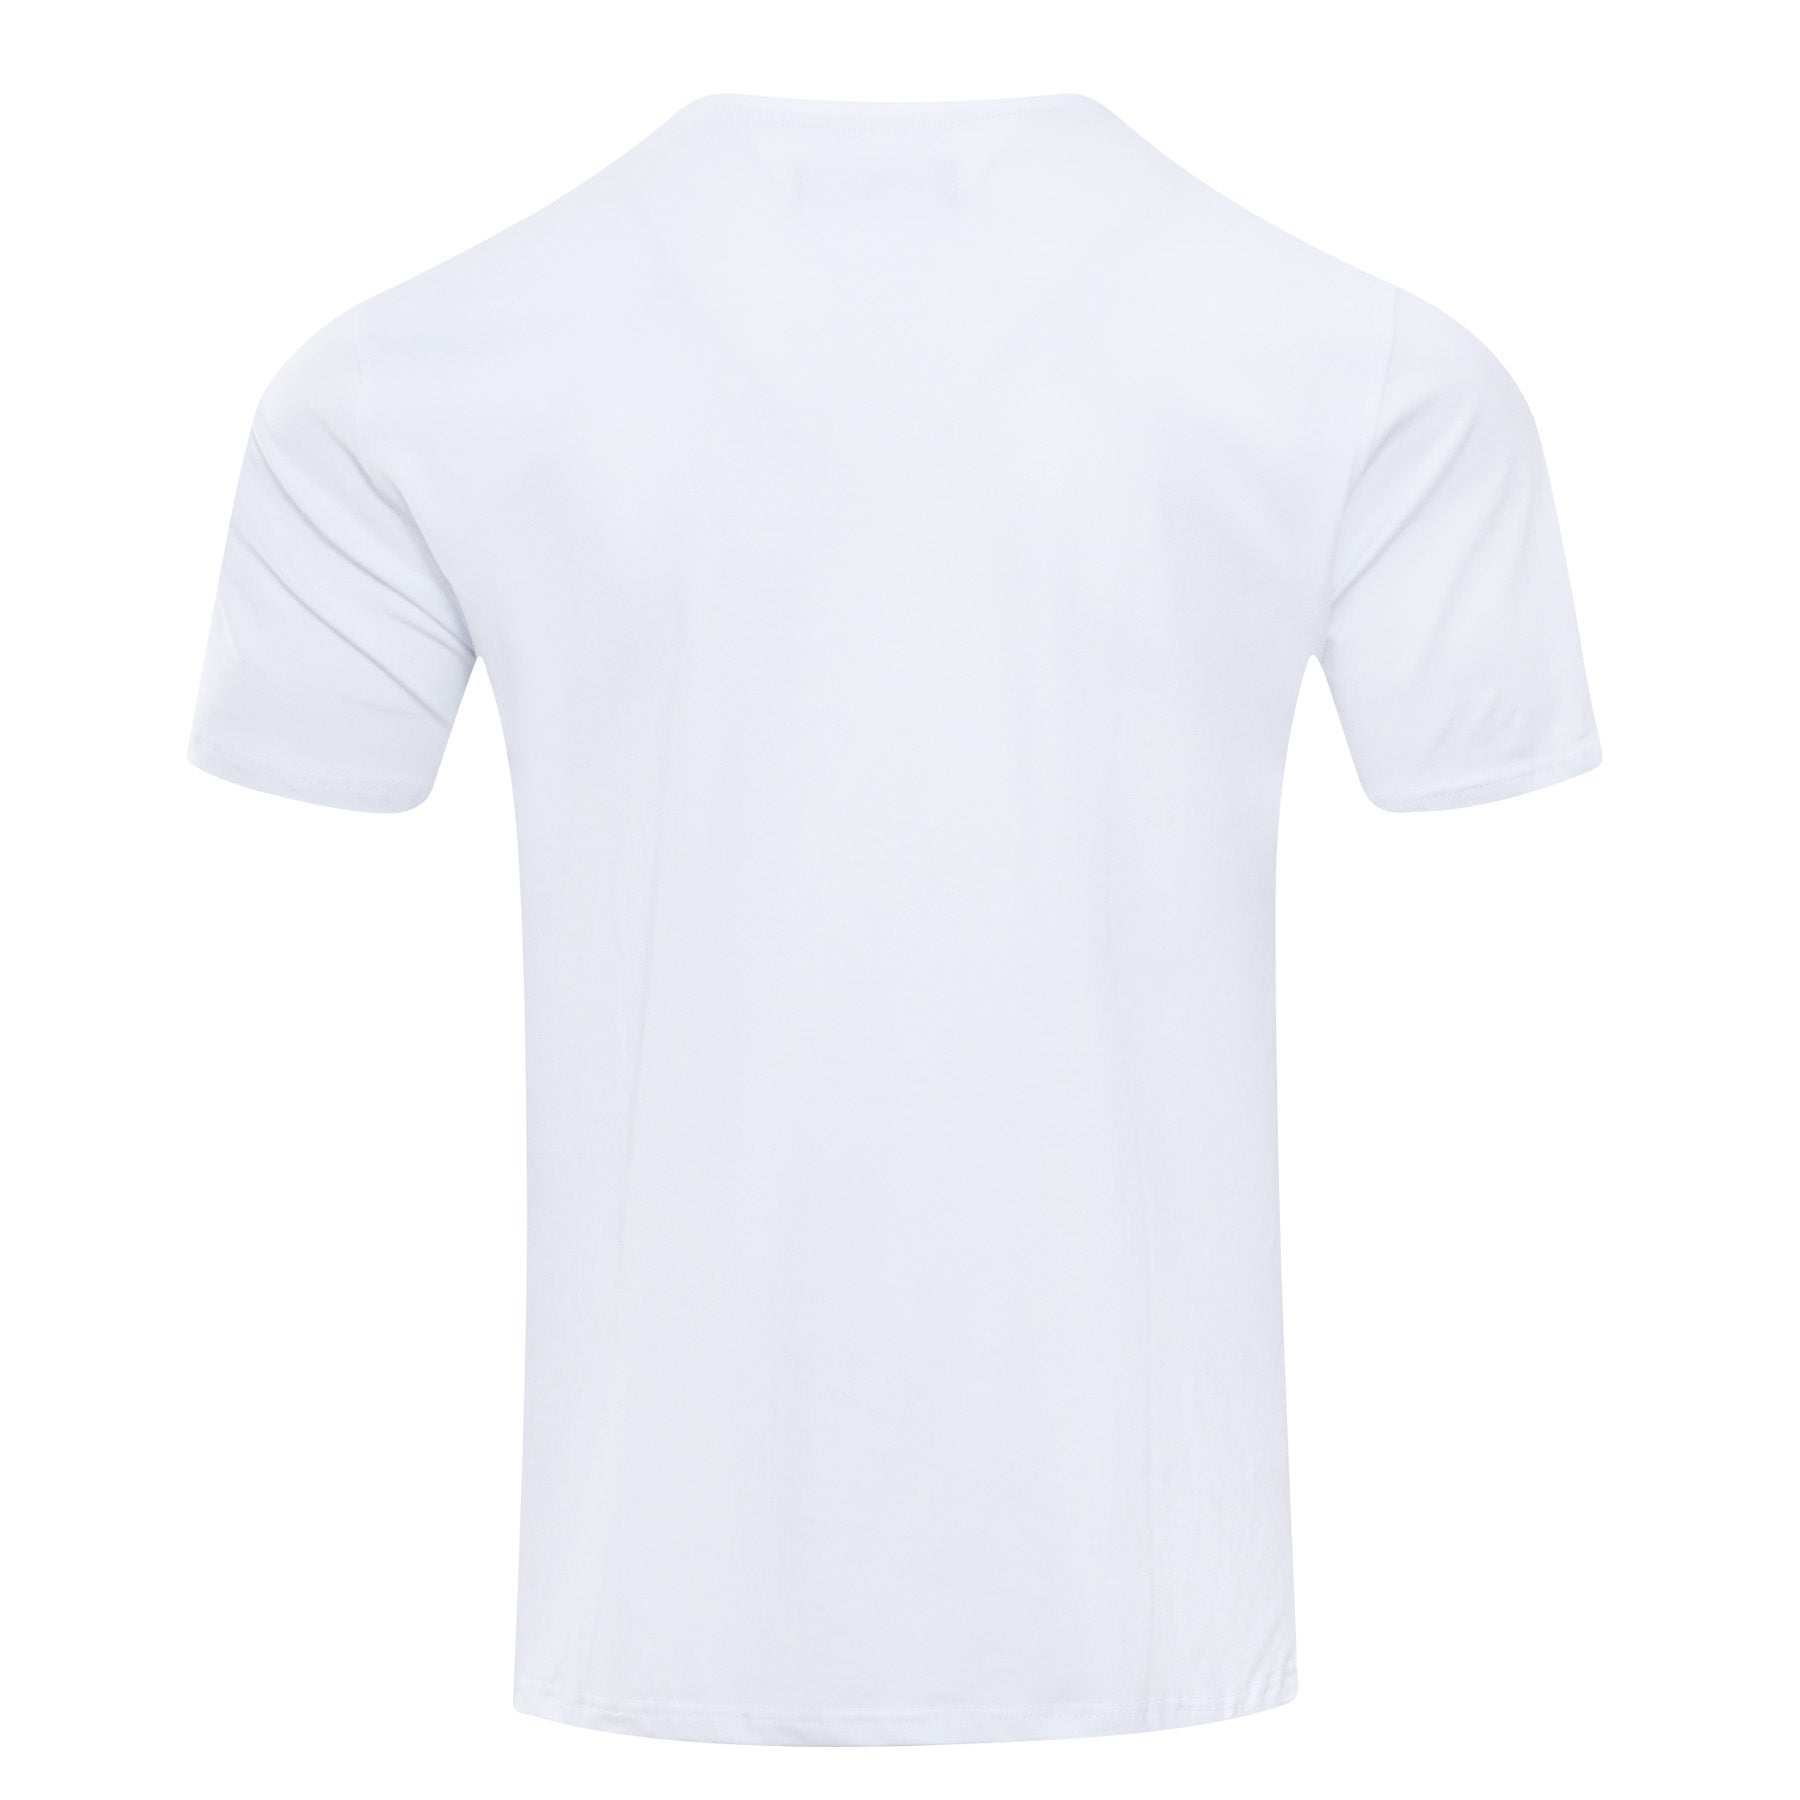 Pro Standard Mens MLB New York Yankees Pro Team T-Shirt LNY131148-GRAY Gray L